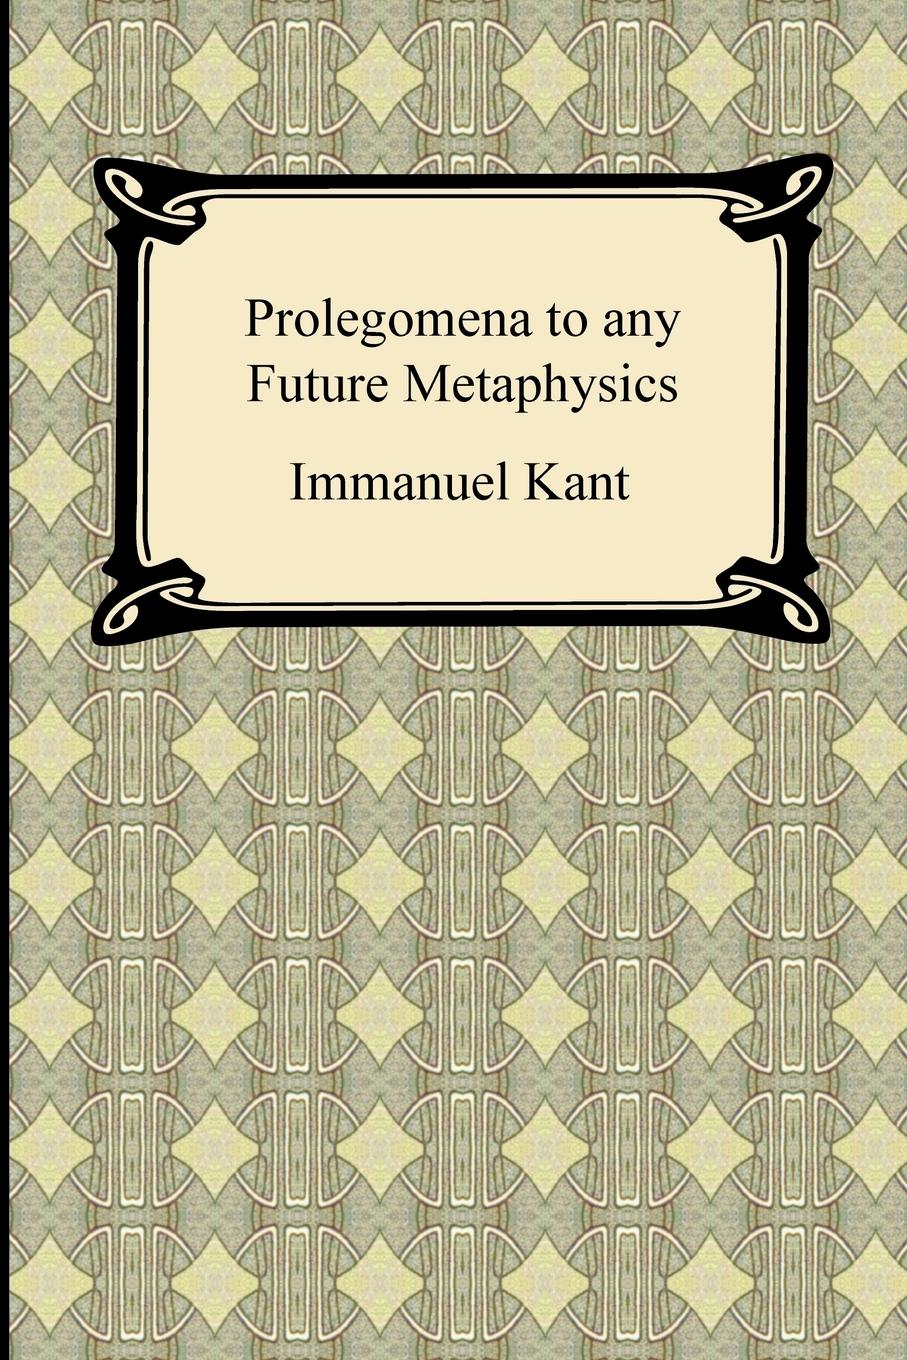 Kant s Prolegomena to any Future Metaphysics - Kant, Immanuel